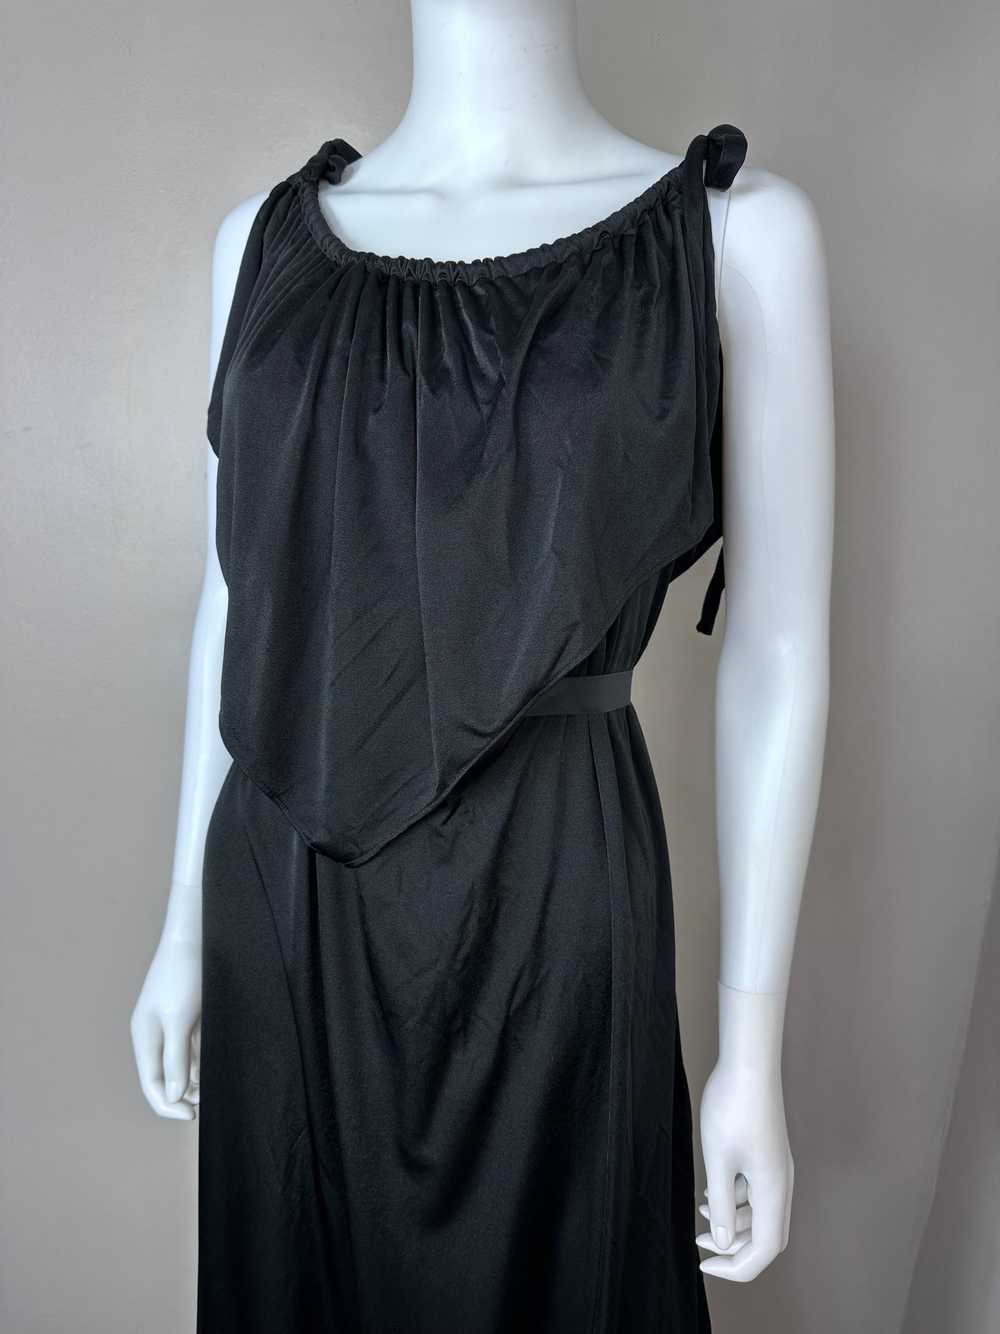 1970s Grecian Inspired Black Maxi Dress, Size 3X - image 6